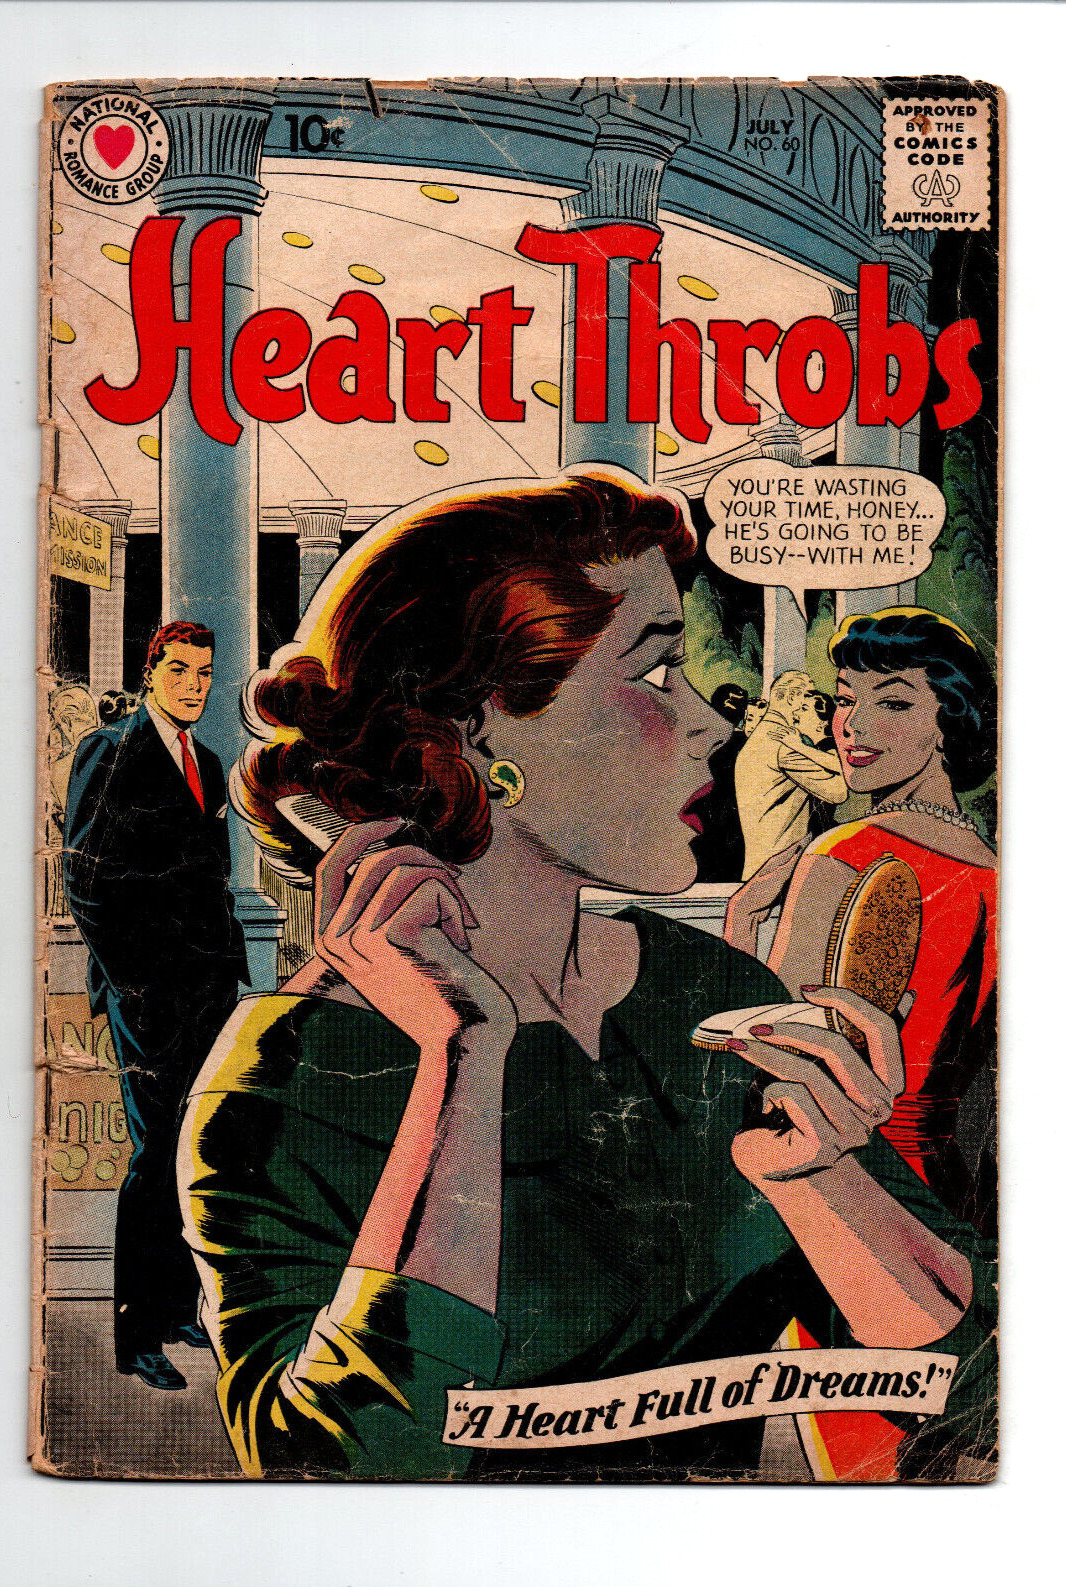 Heart Throbs #60 - Romance - DC Comics - 1957 - PR/FR